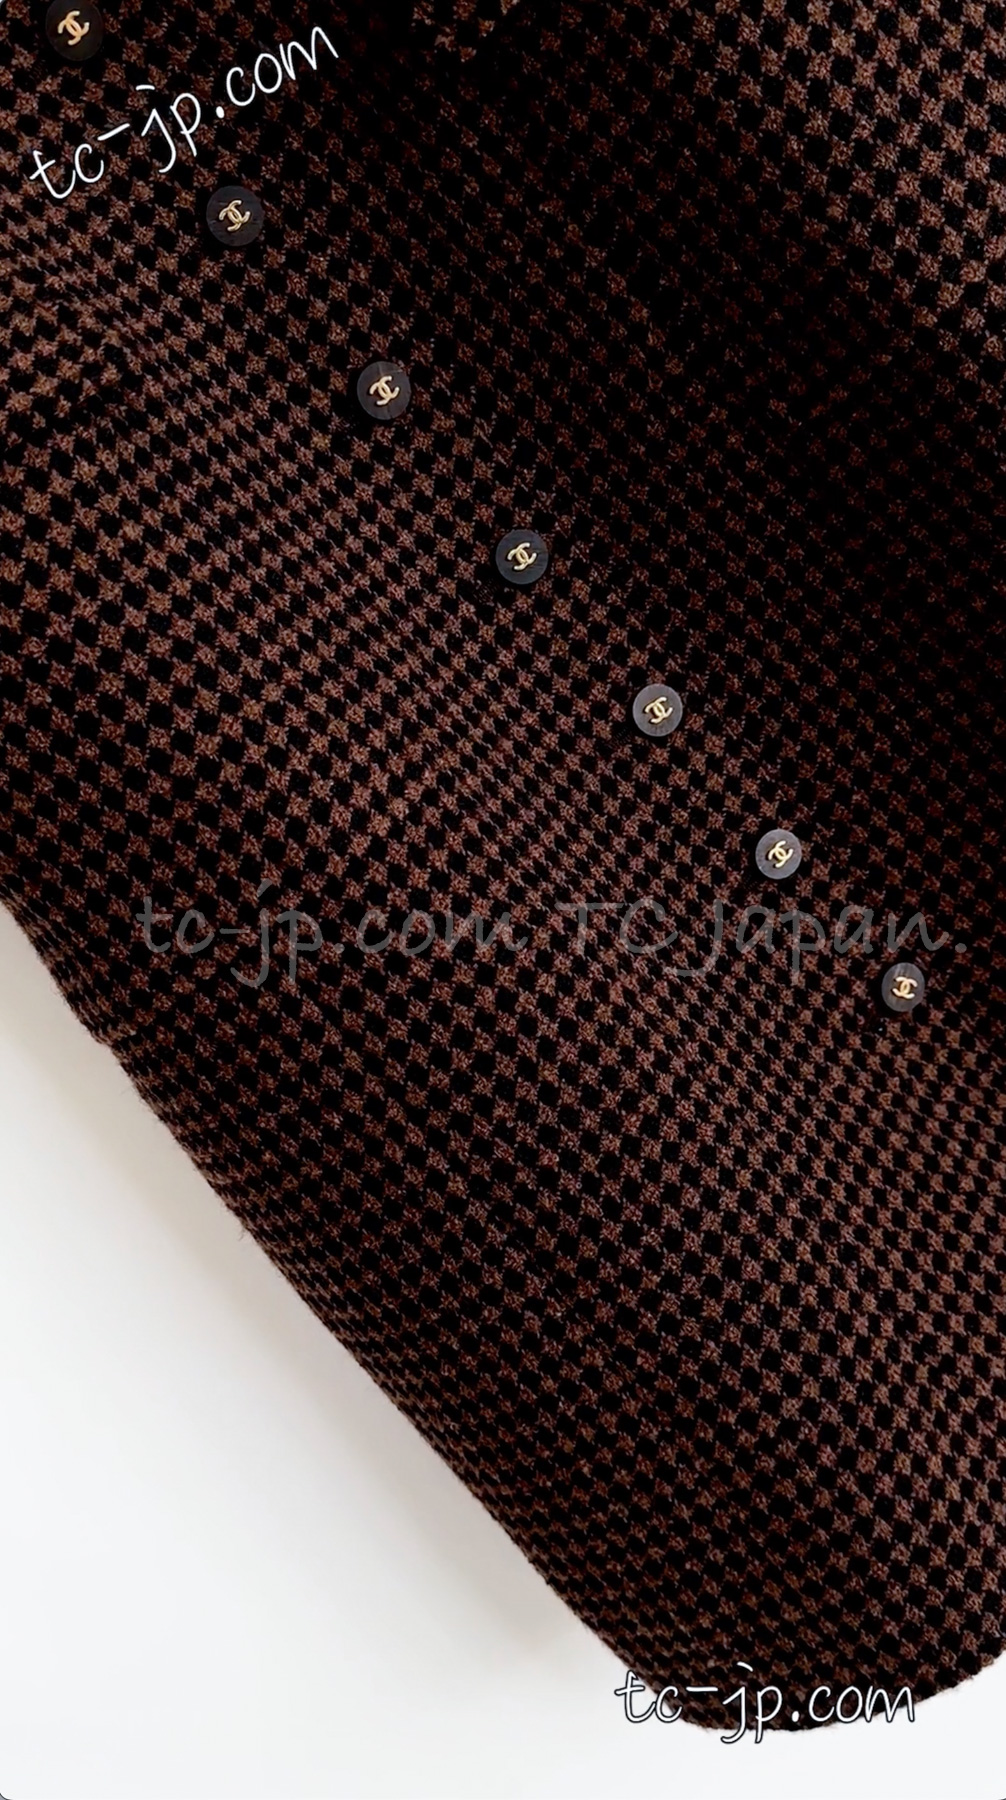  Chanel пальто CHANEL как новый Vintage * Brown * черный * тысяч птица ..*CC кнопка One-piece F38